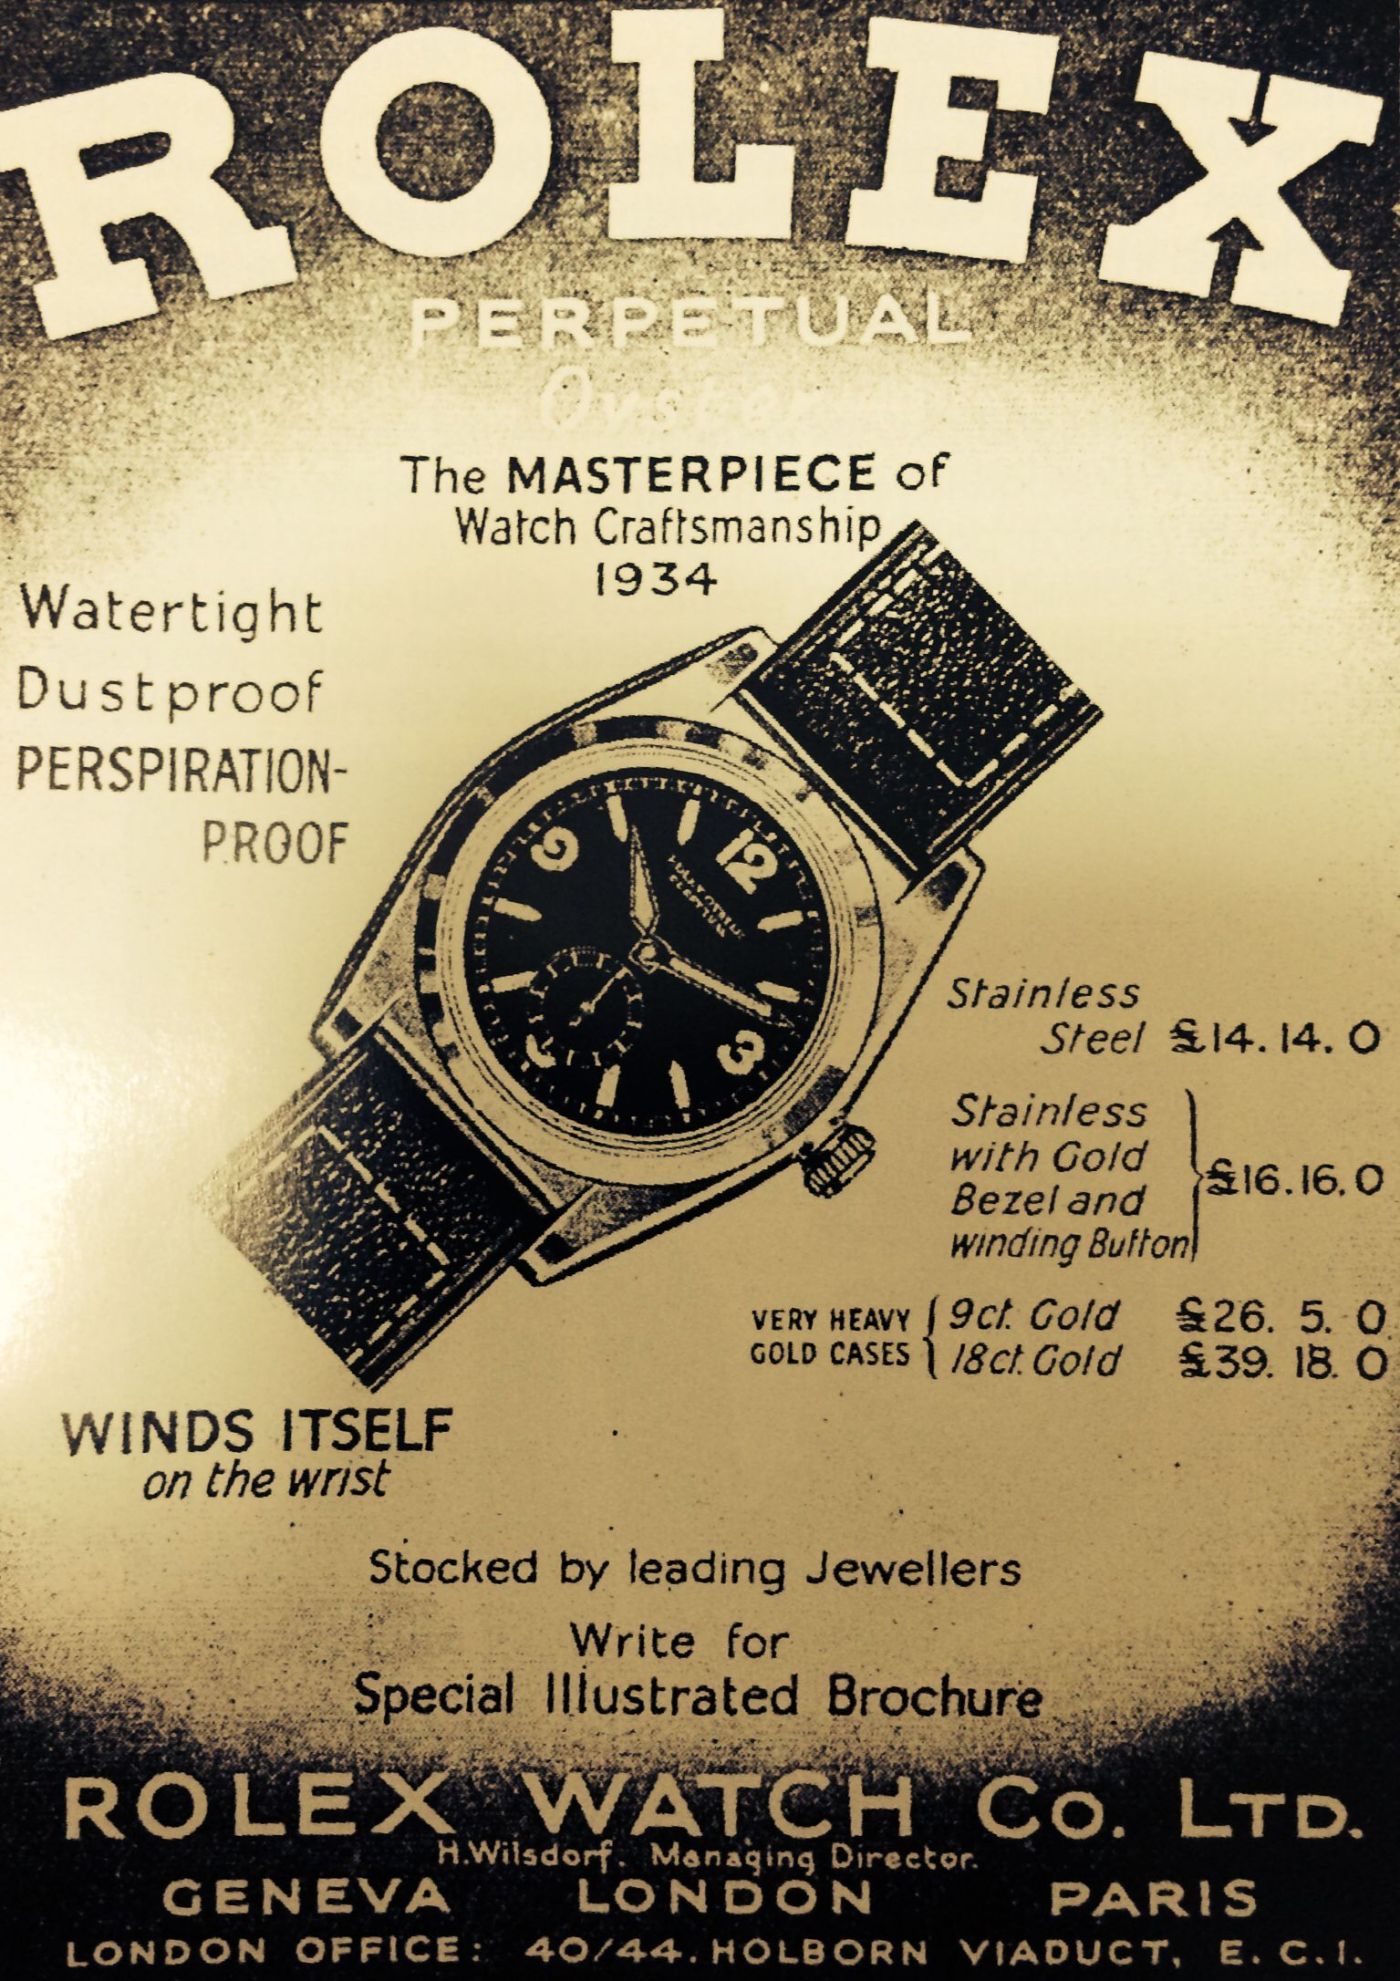 Vintage Rolex Ad